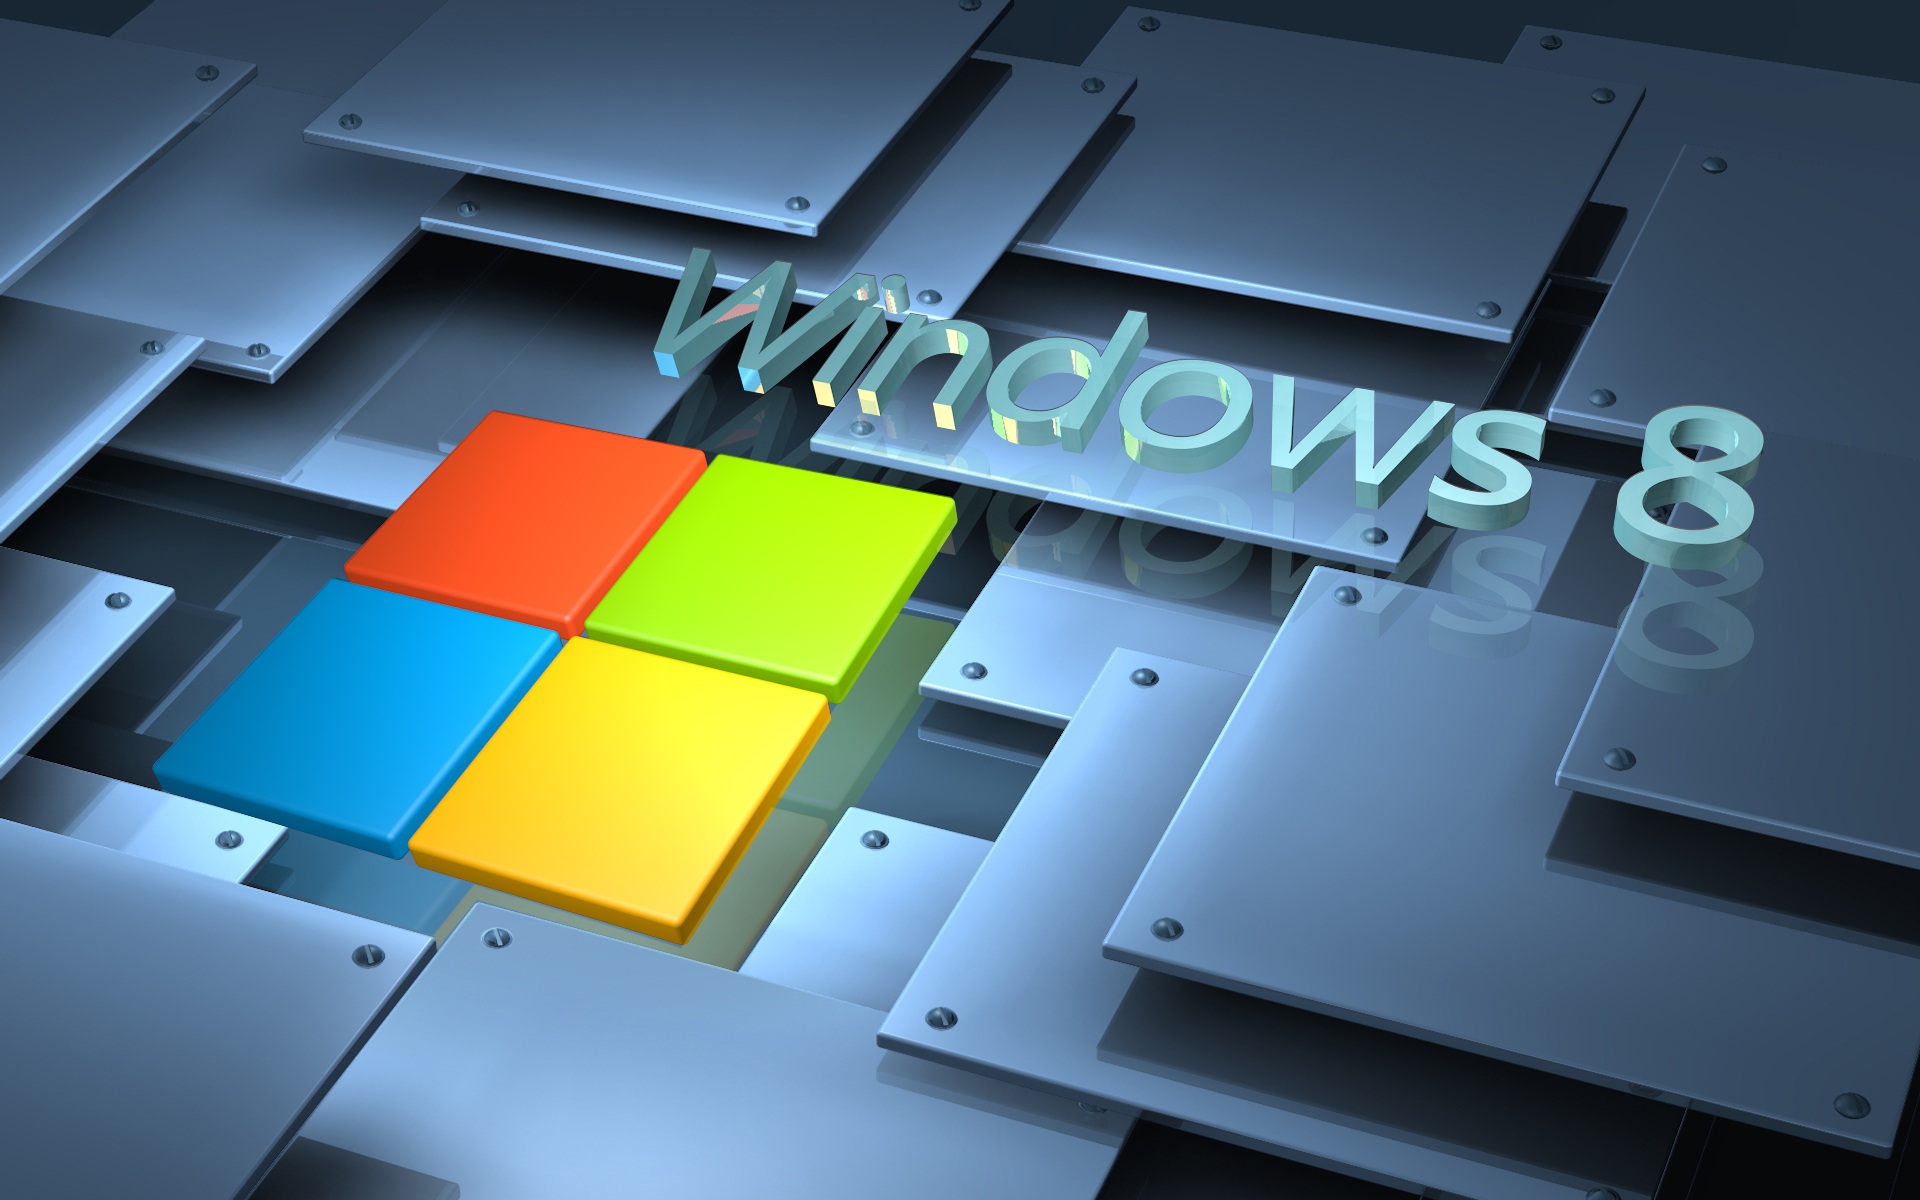 Microsoft Windows 8 System Logo Wallpaper Brands And Logos Wallpaper Better